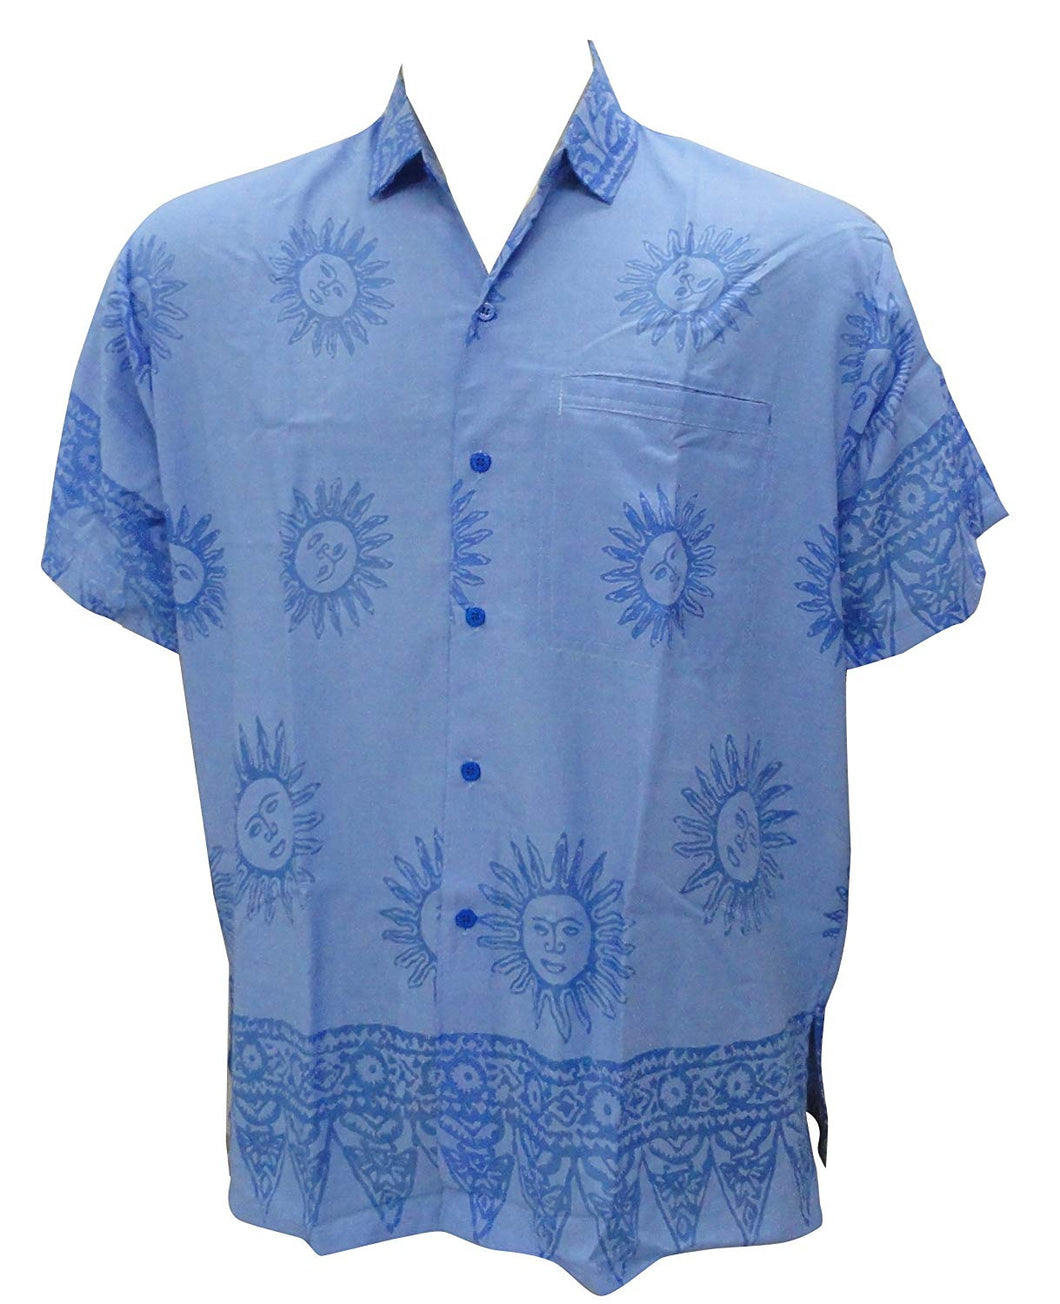 la-leela-shirt-casual-button-down-short-sleeve-beach-shirt-men-pocket-brasso-171